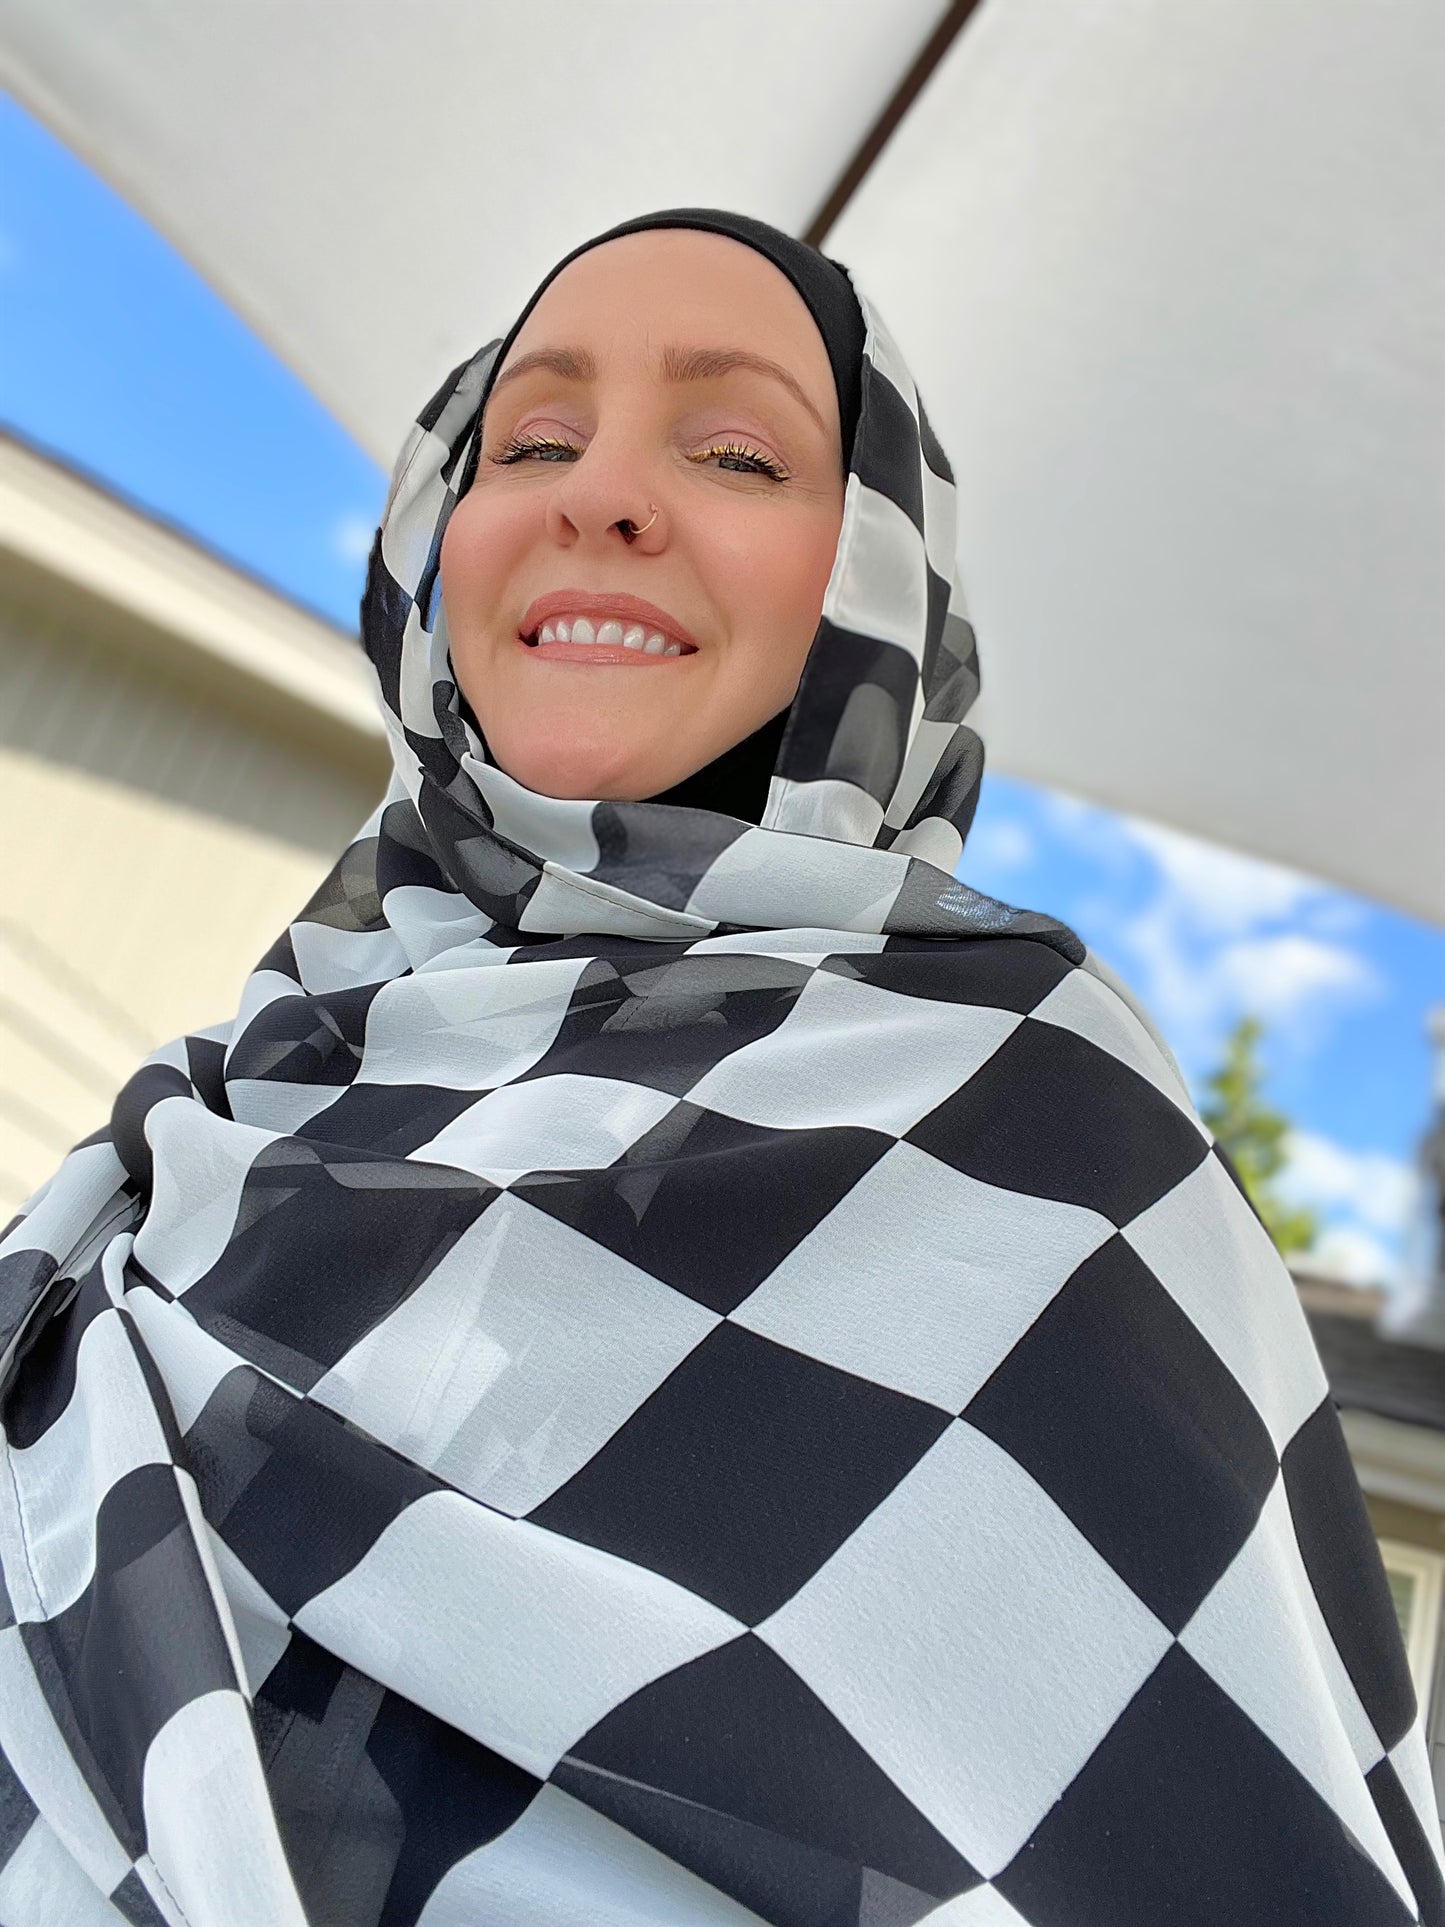 Chiffon Hijab: Check That!